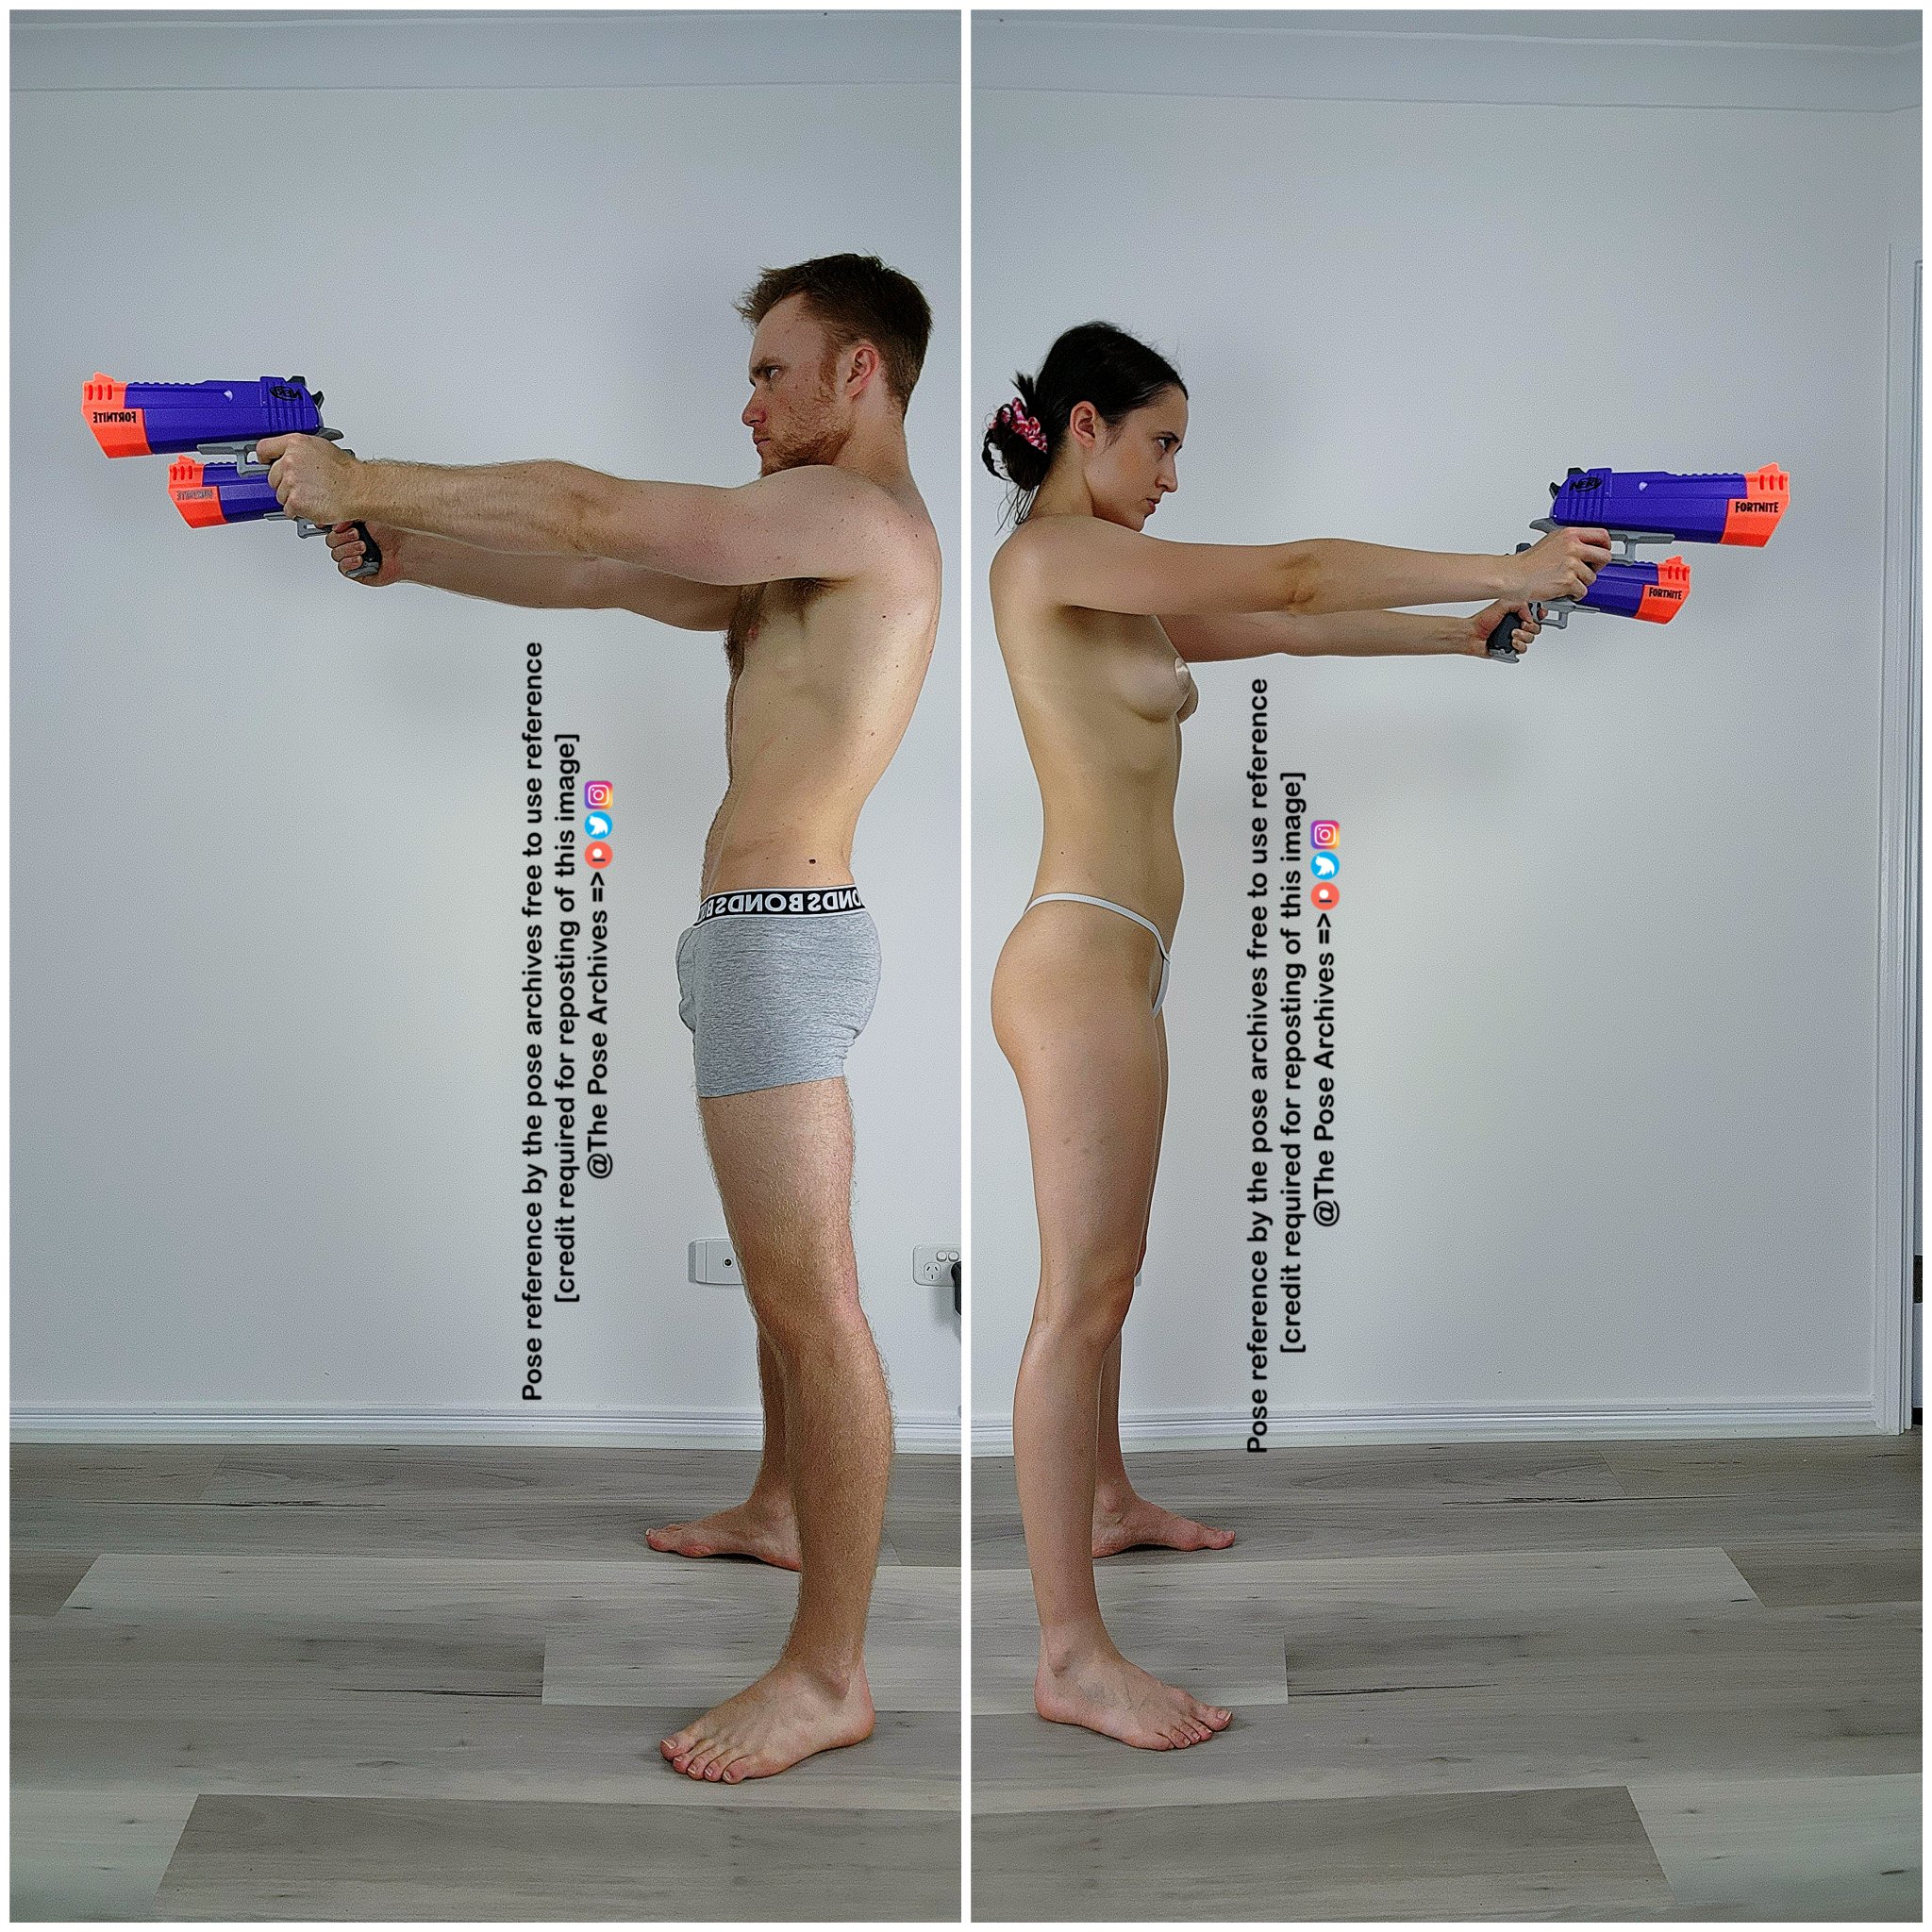 Pose Studies 21 (guns) by Vibrantes on DeviantArt